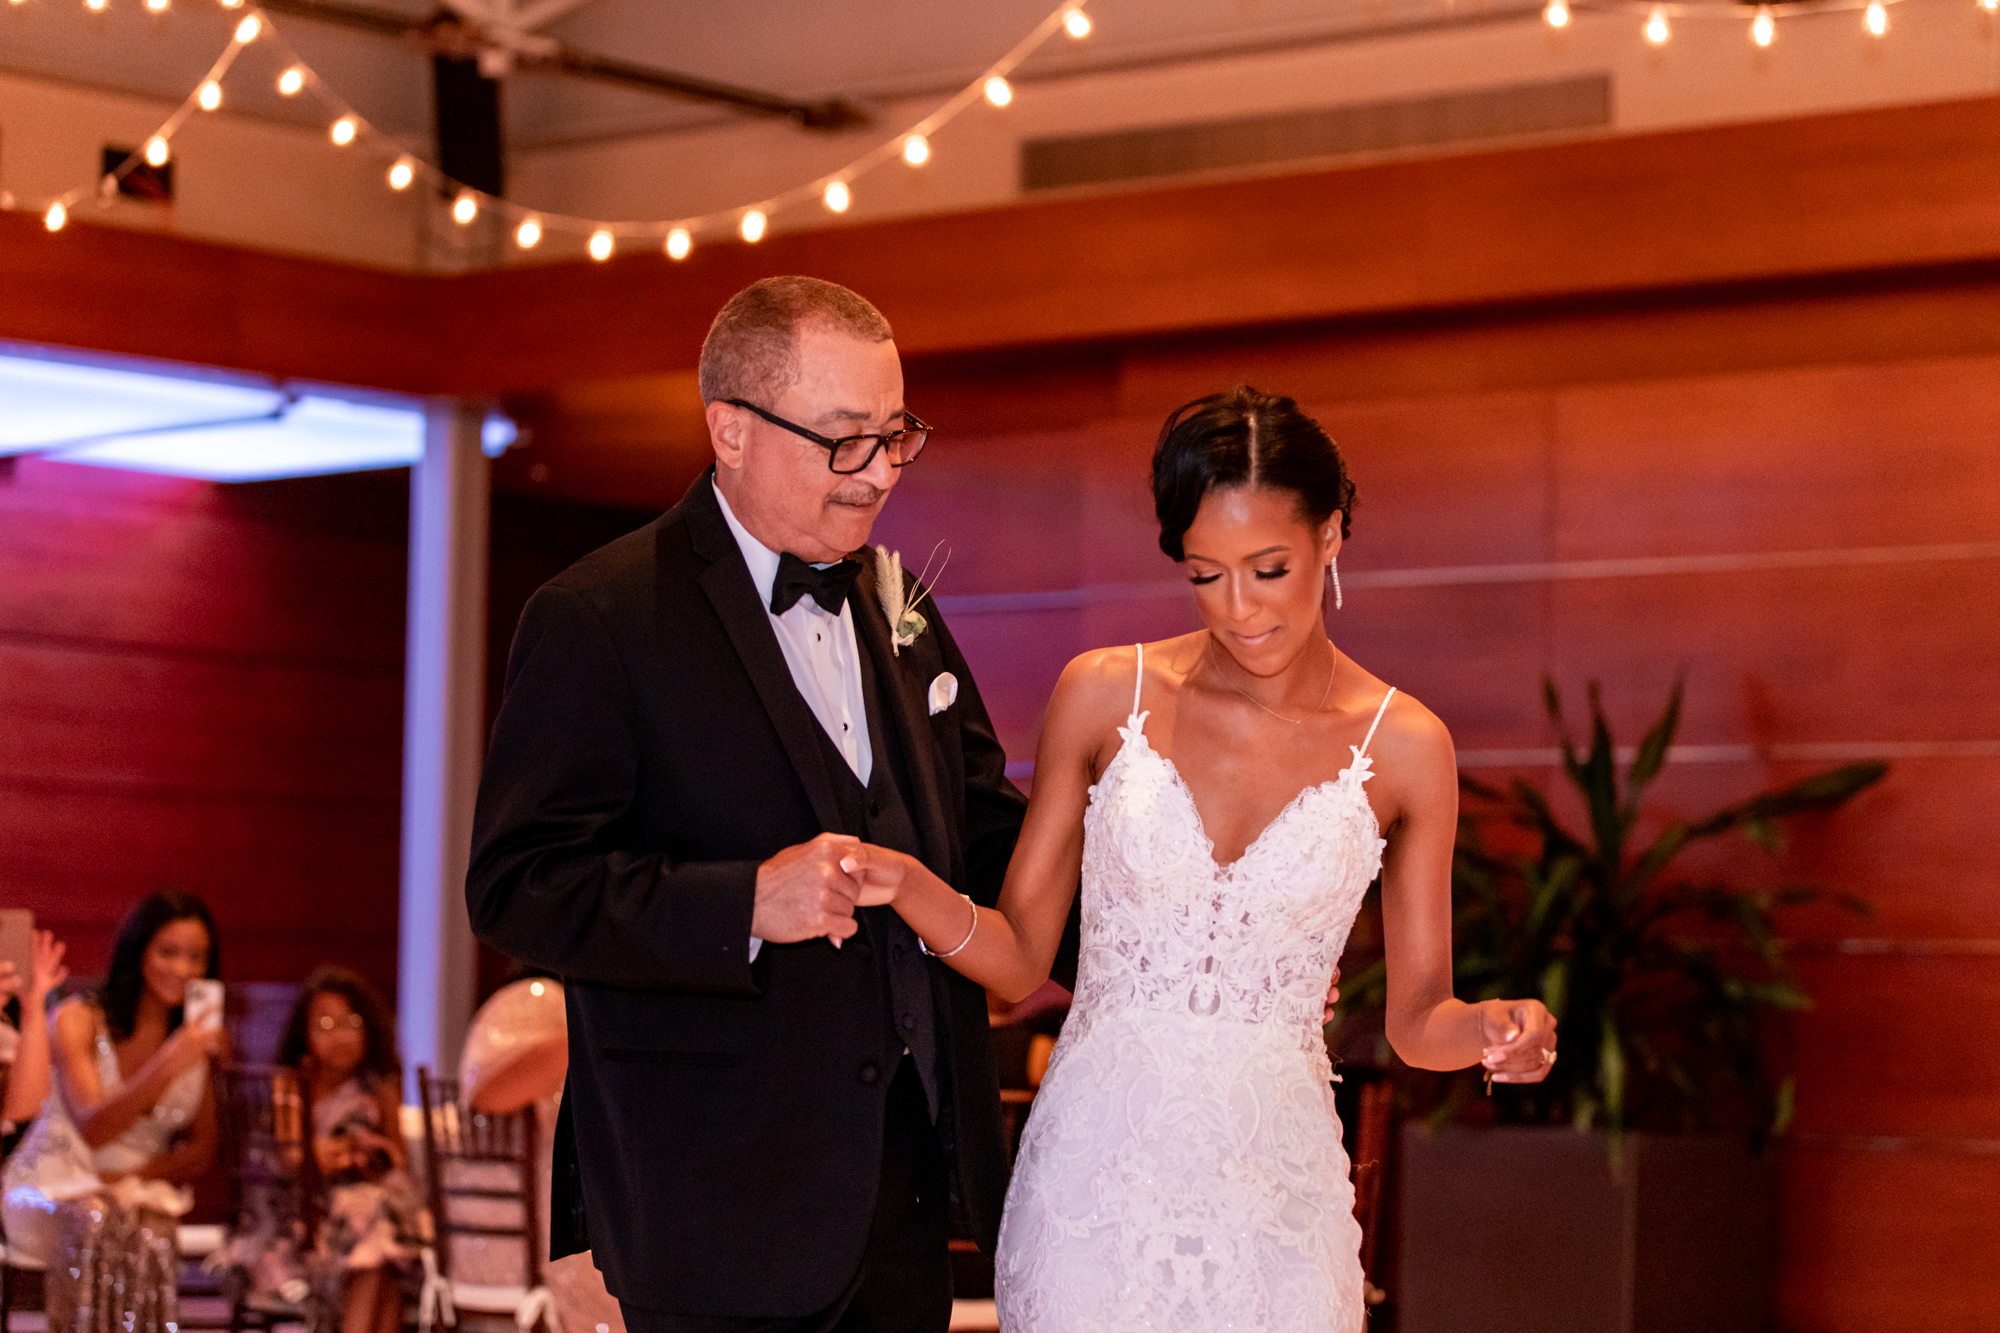 father daughter dance at a kimmel center wedding reception